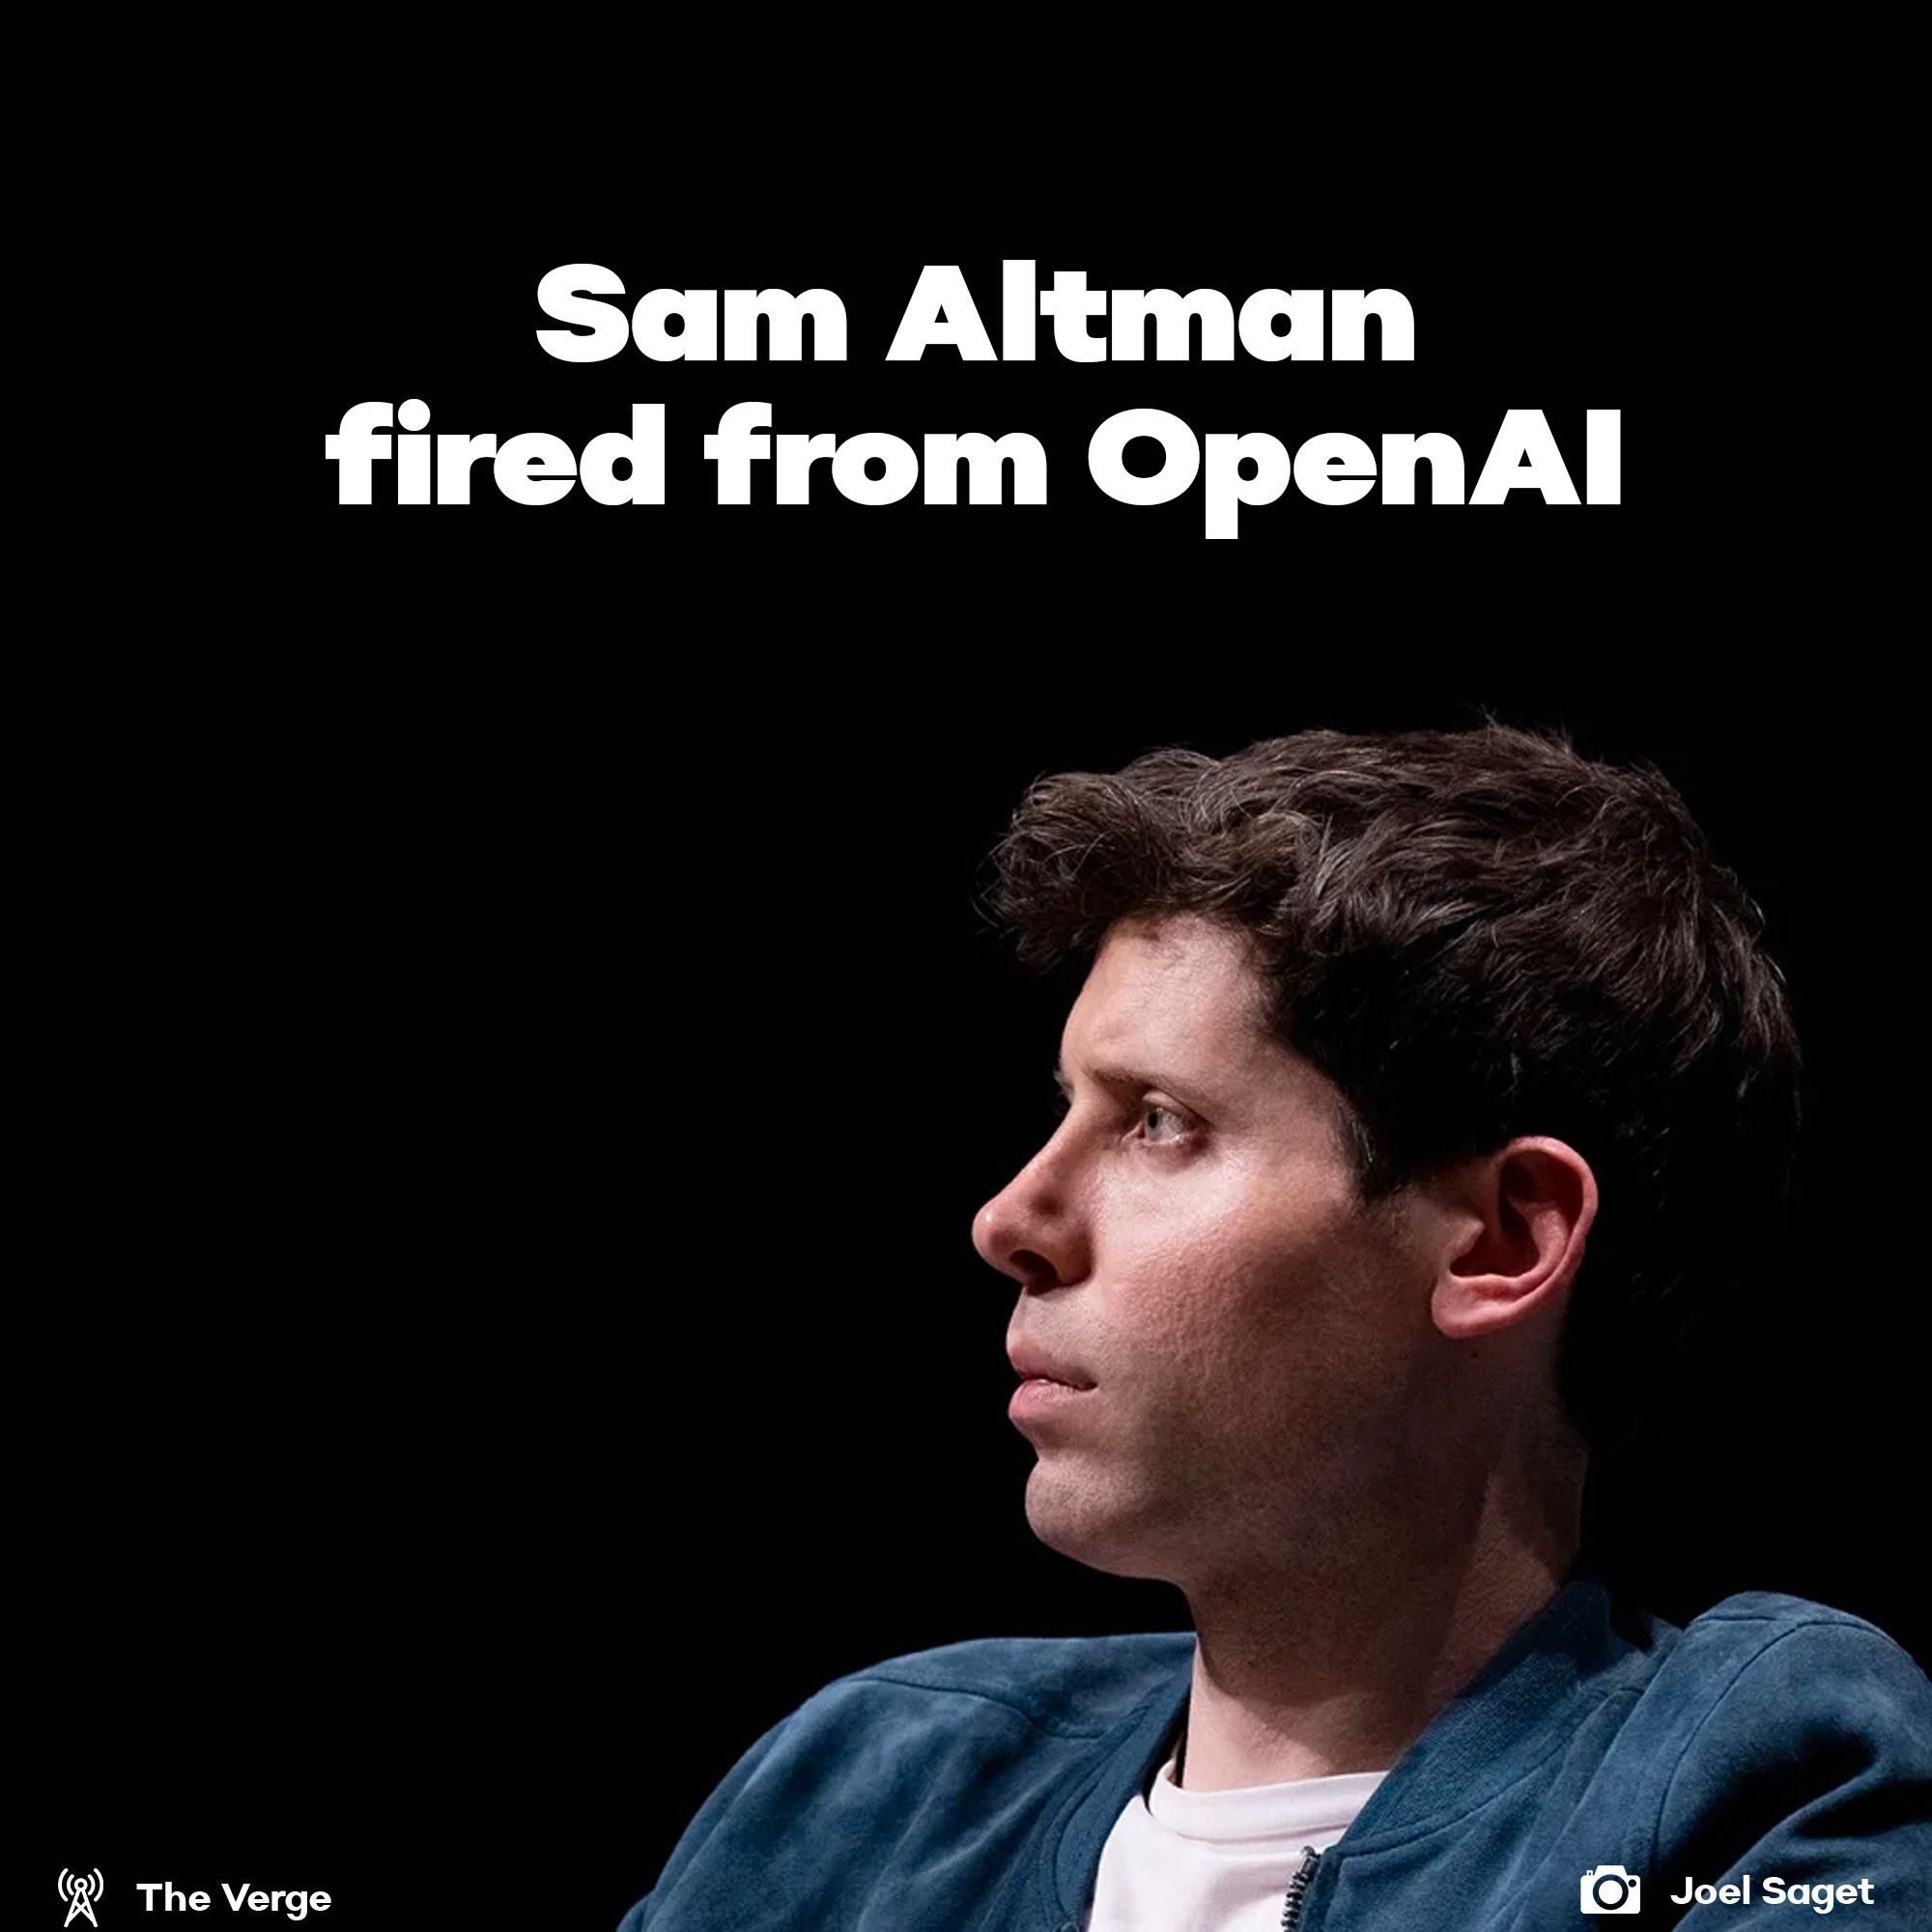 Sam Altman fired from OpenAI